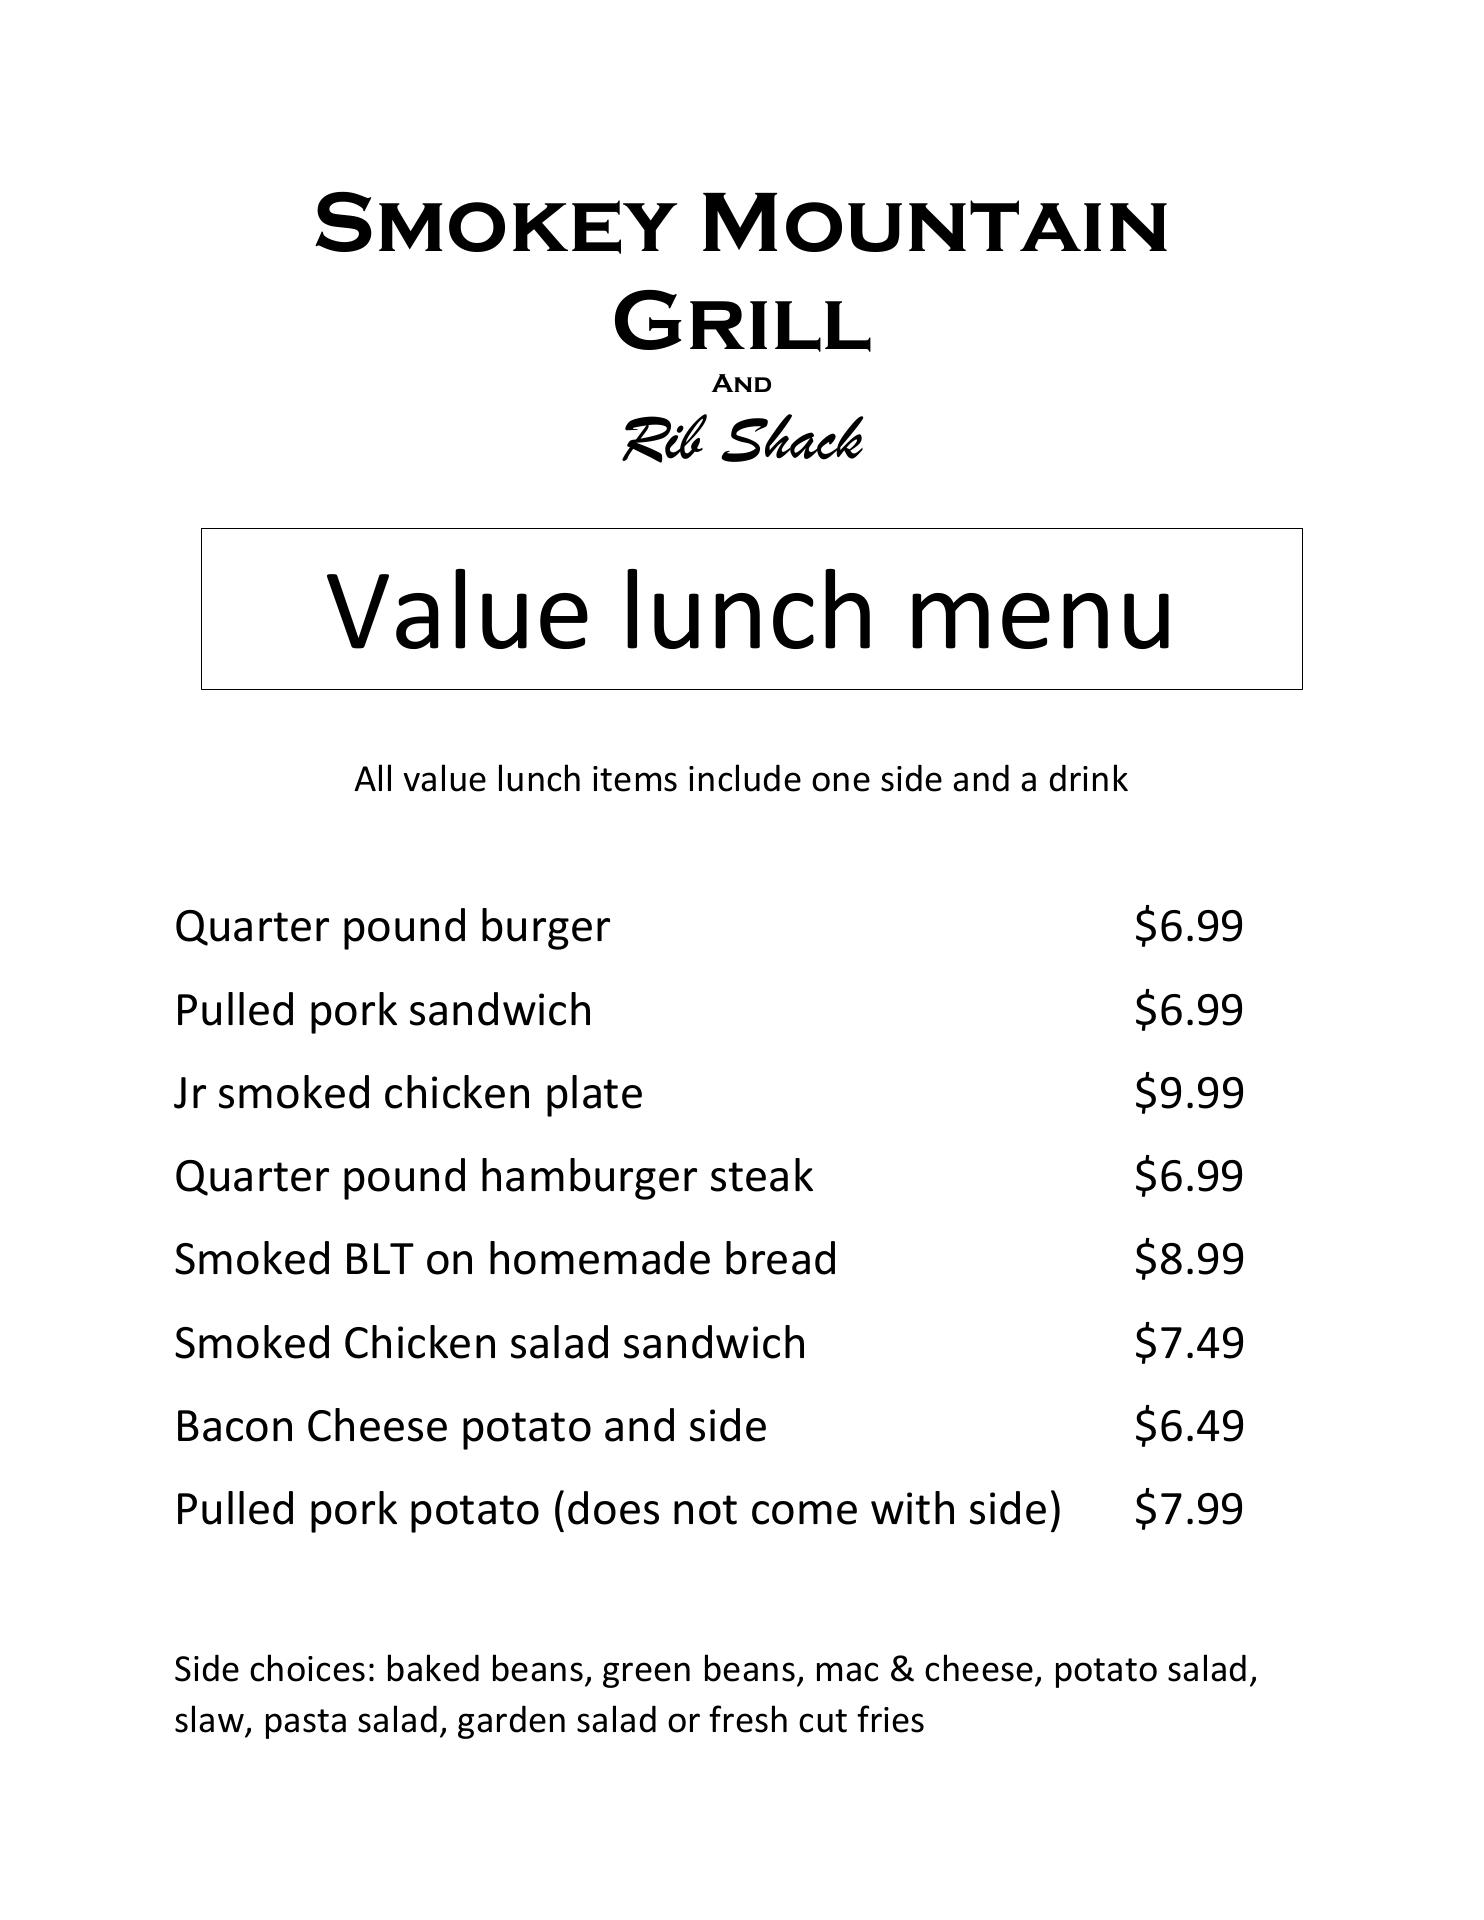 Smokey Mountain Grill & Rib Restaurant 3799 US 49, Mendenhall, MS 39114